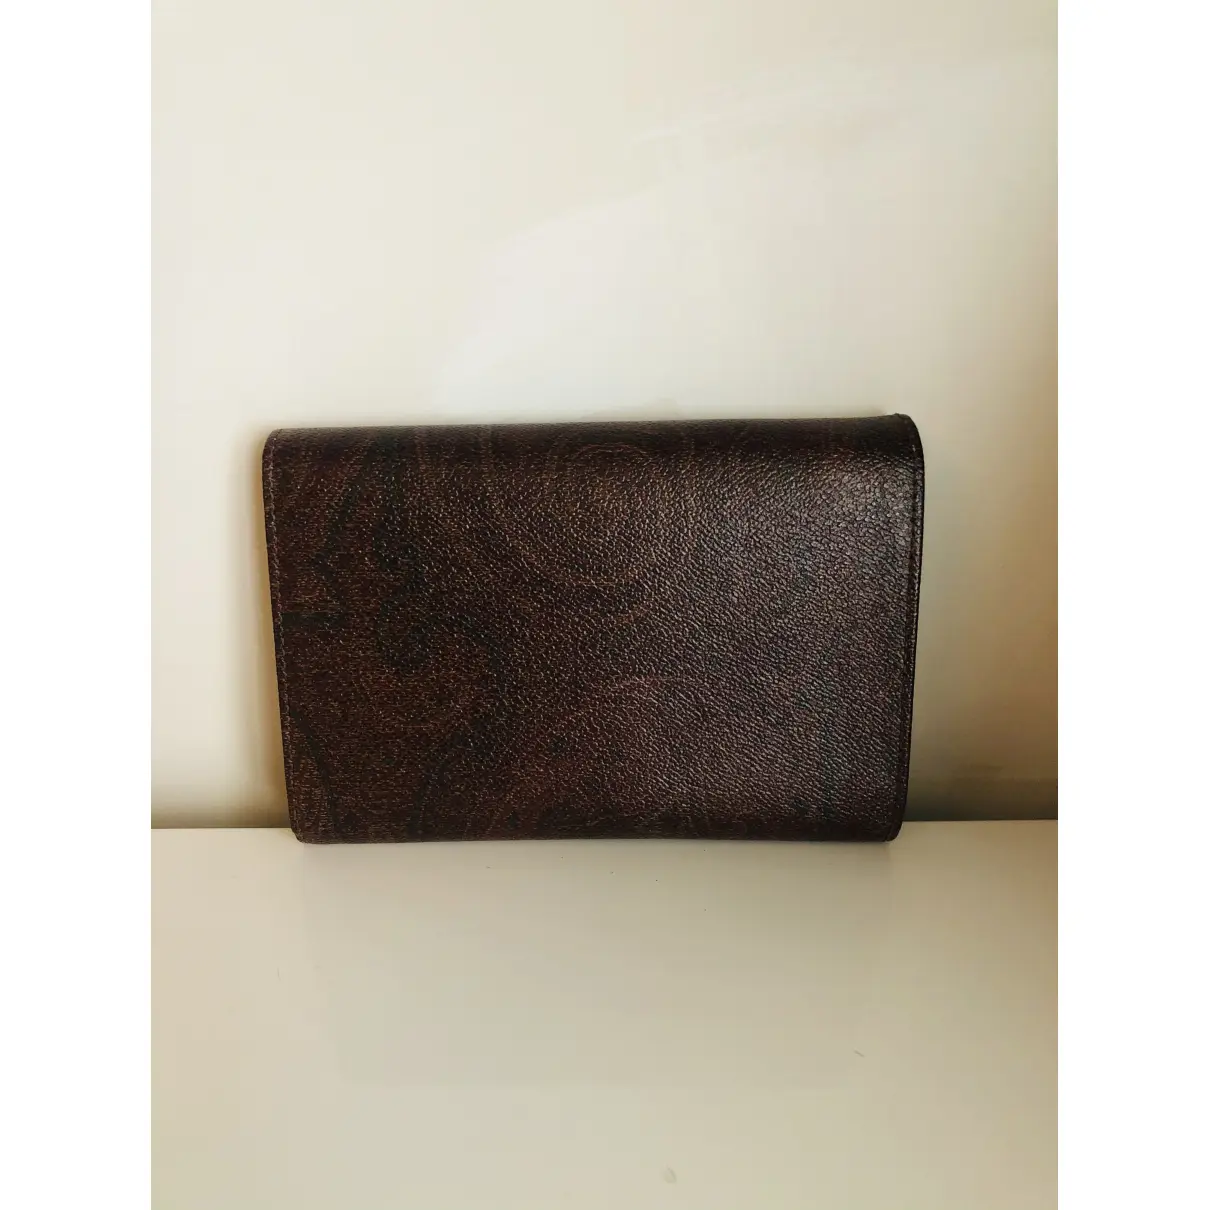 Buy Etro Leather wallet online